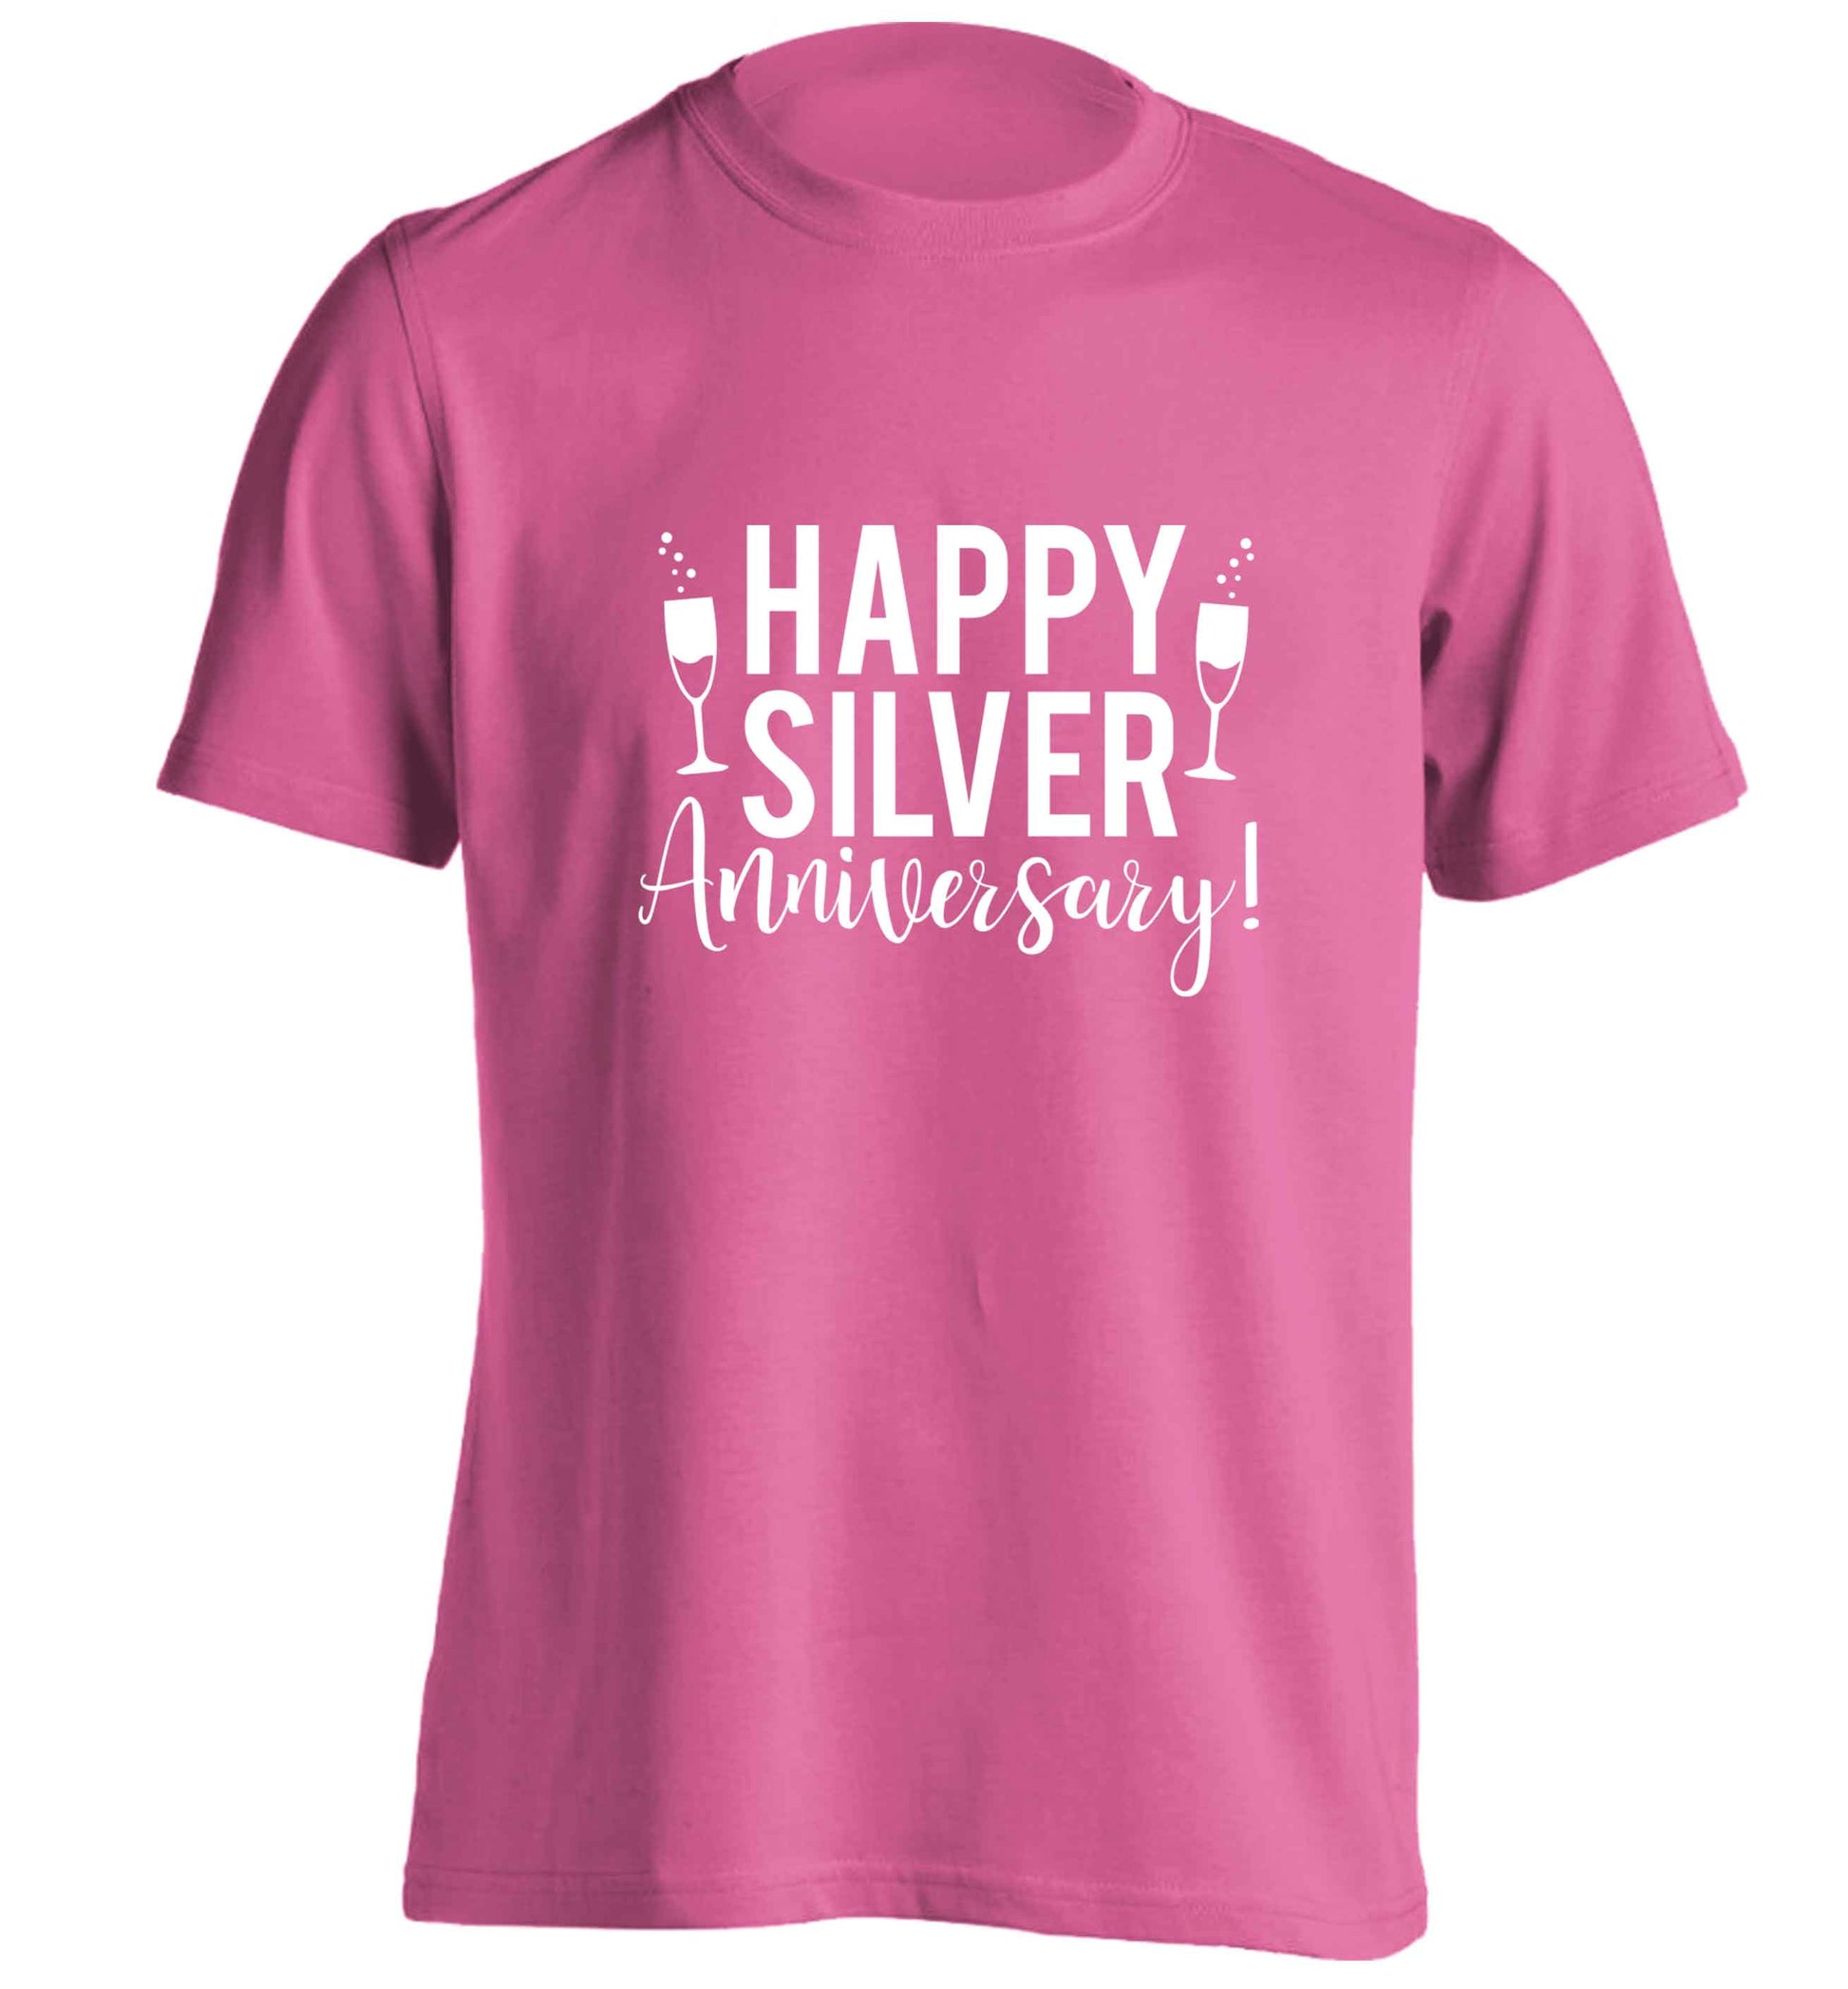 Happy silver anniversary! adults unisex pink Tshirt 2XL